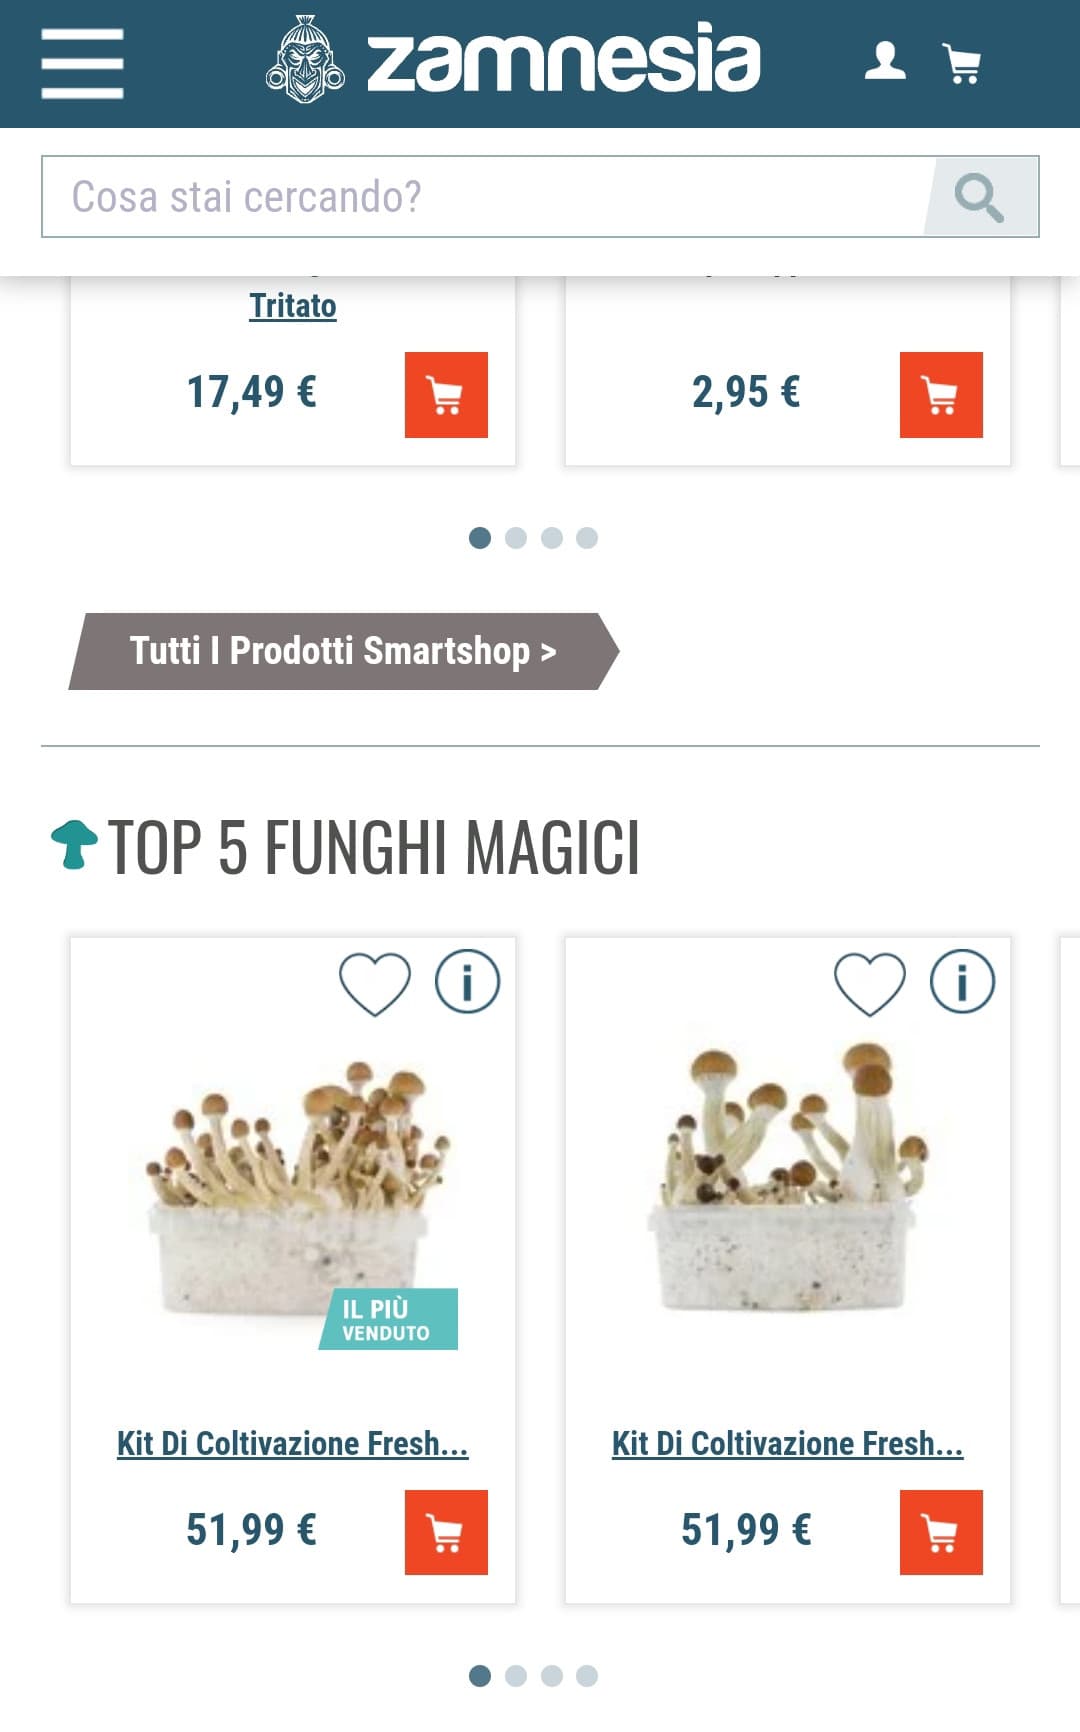 Top 5 funghi magici 😋